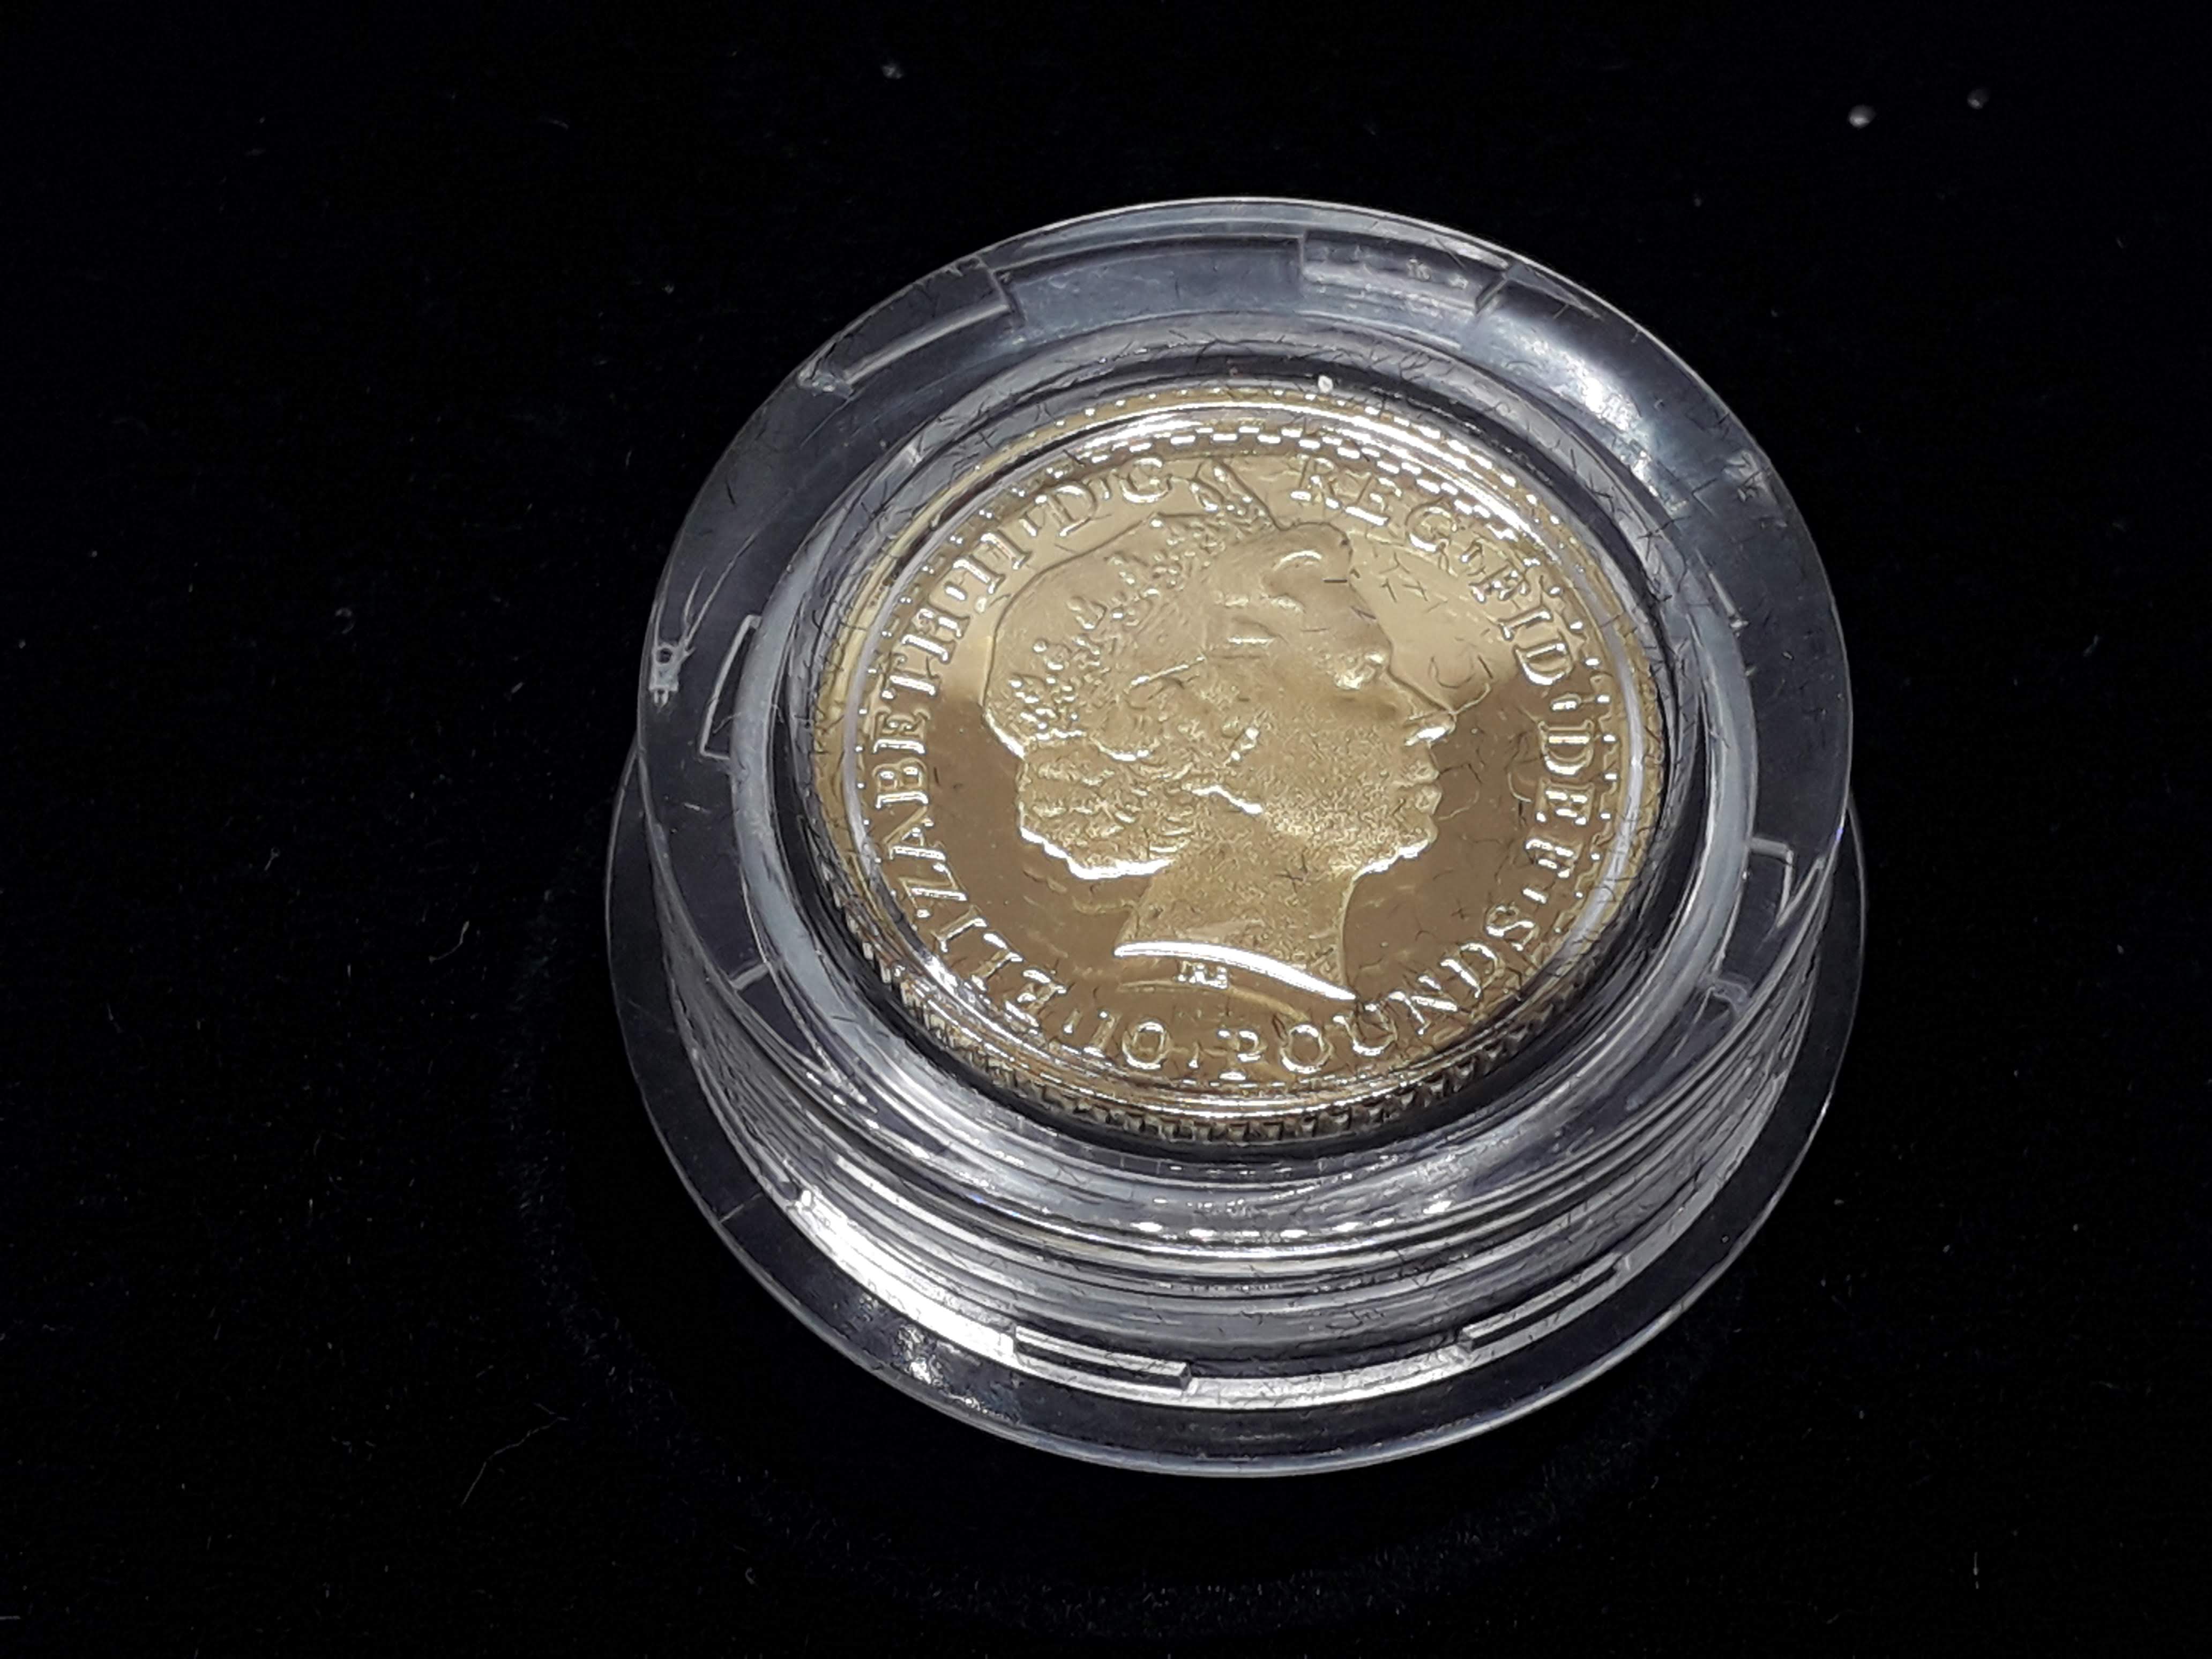 Elizabeth II Royal Mint 2010 Britannia Three Coin Gold Proof Set comprising £10, £25 & £50, 0.9167 - Image 5 of 7